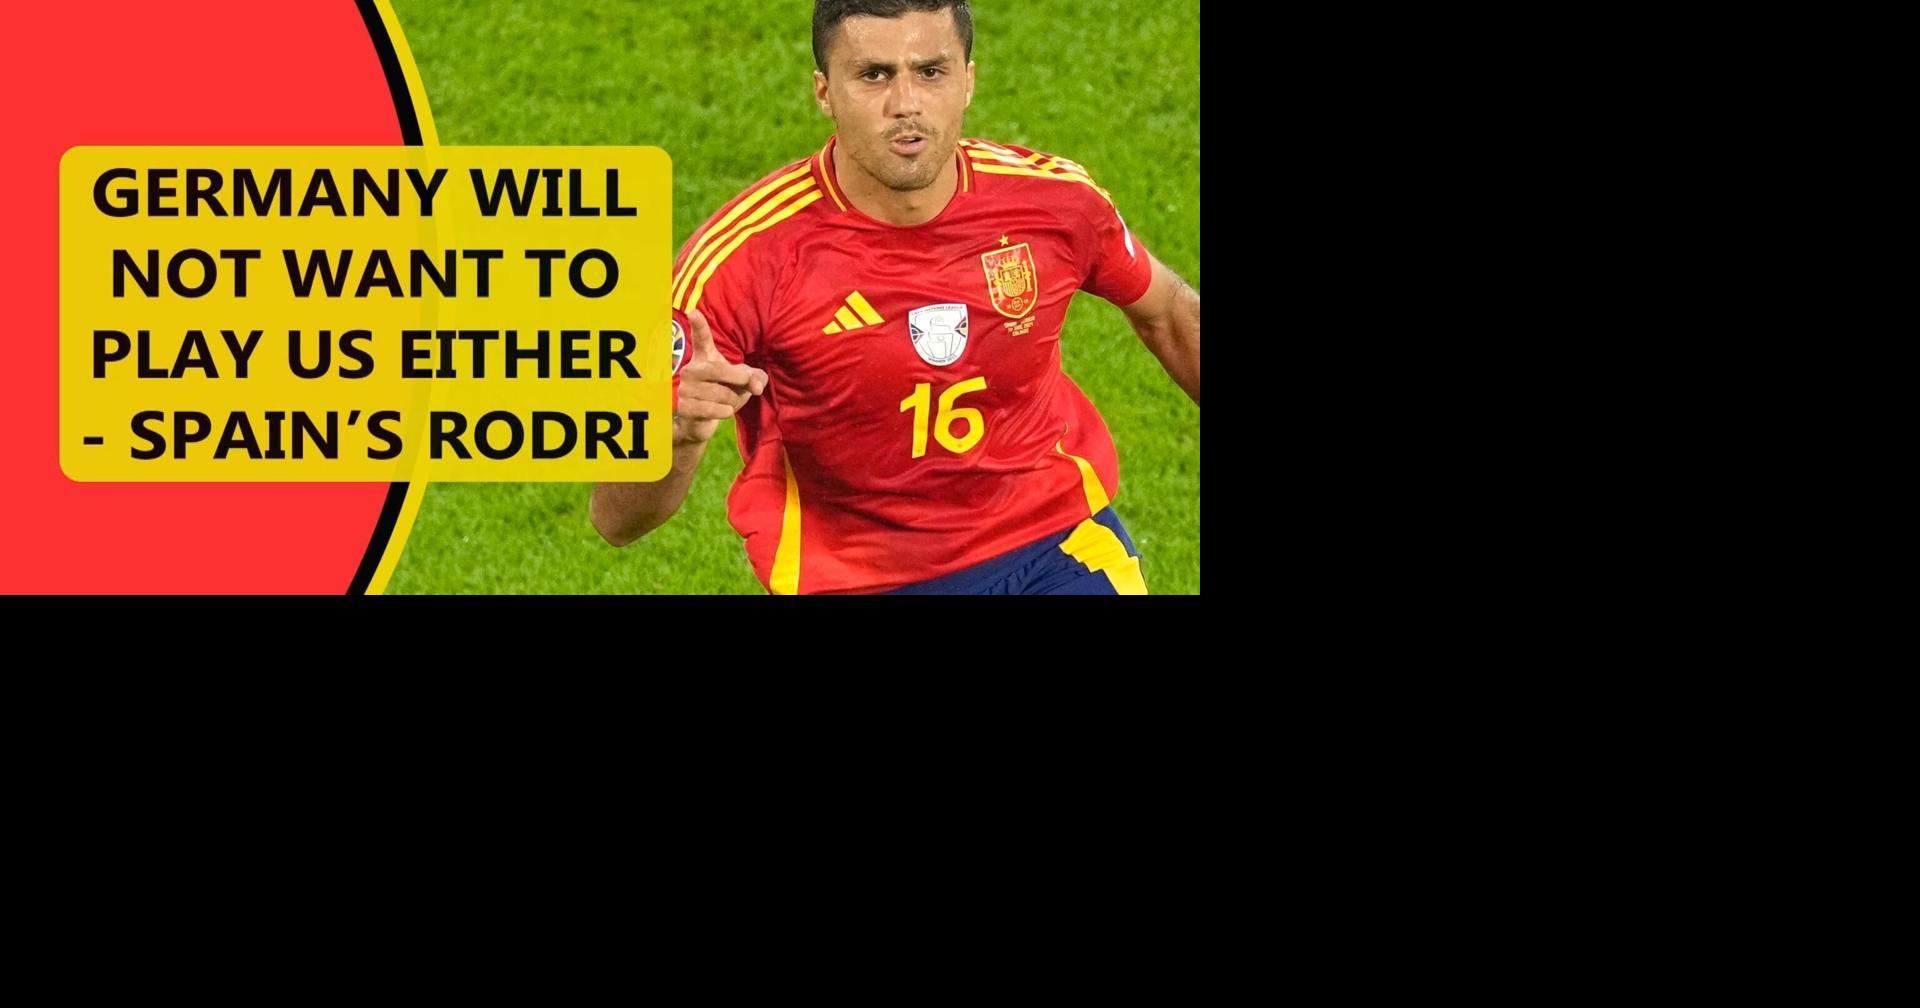 Alemania tampoco querrá enfrentarnos – Rodri de España |  Deportes